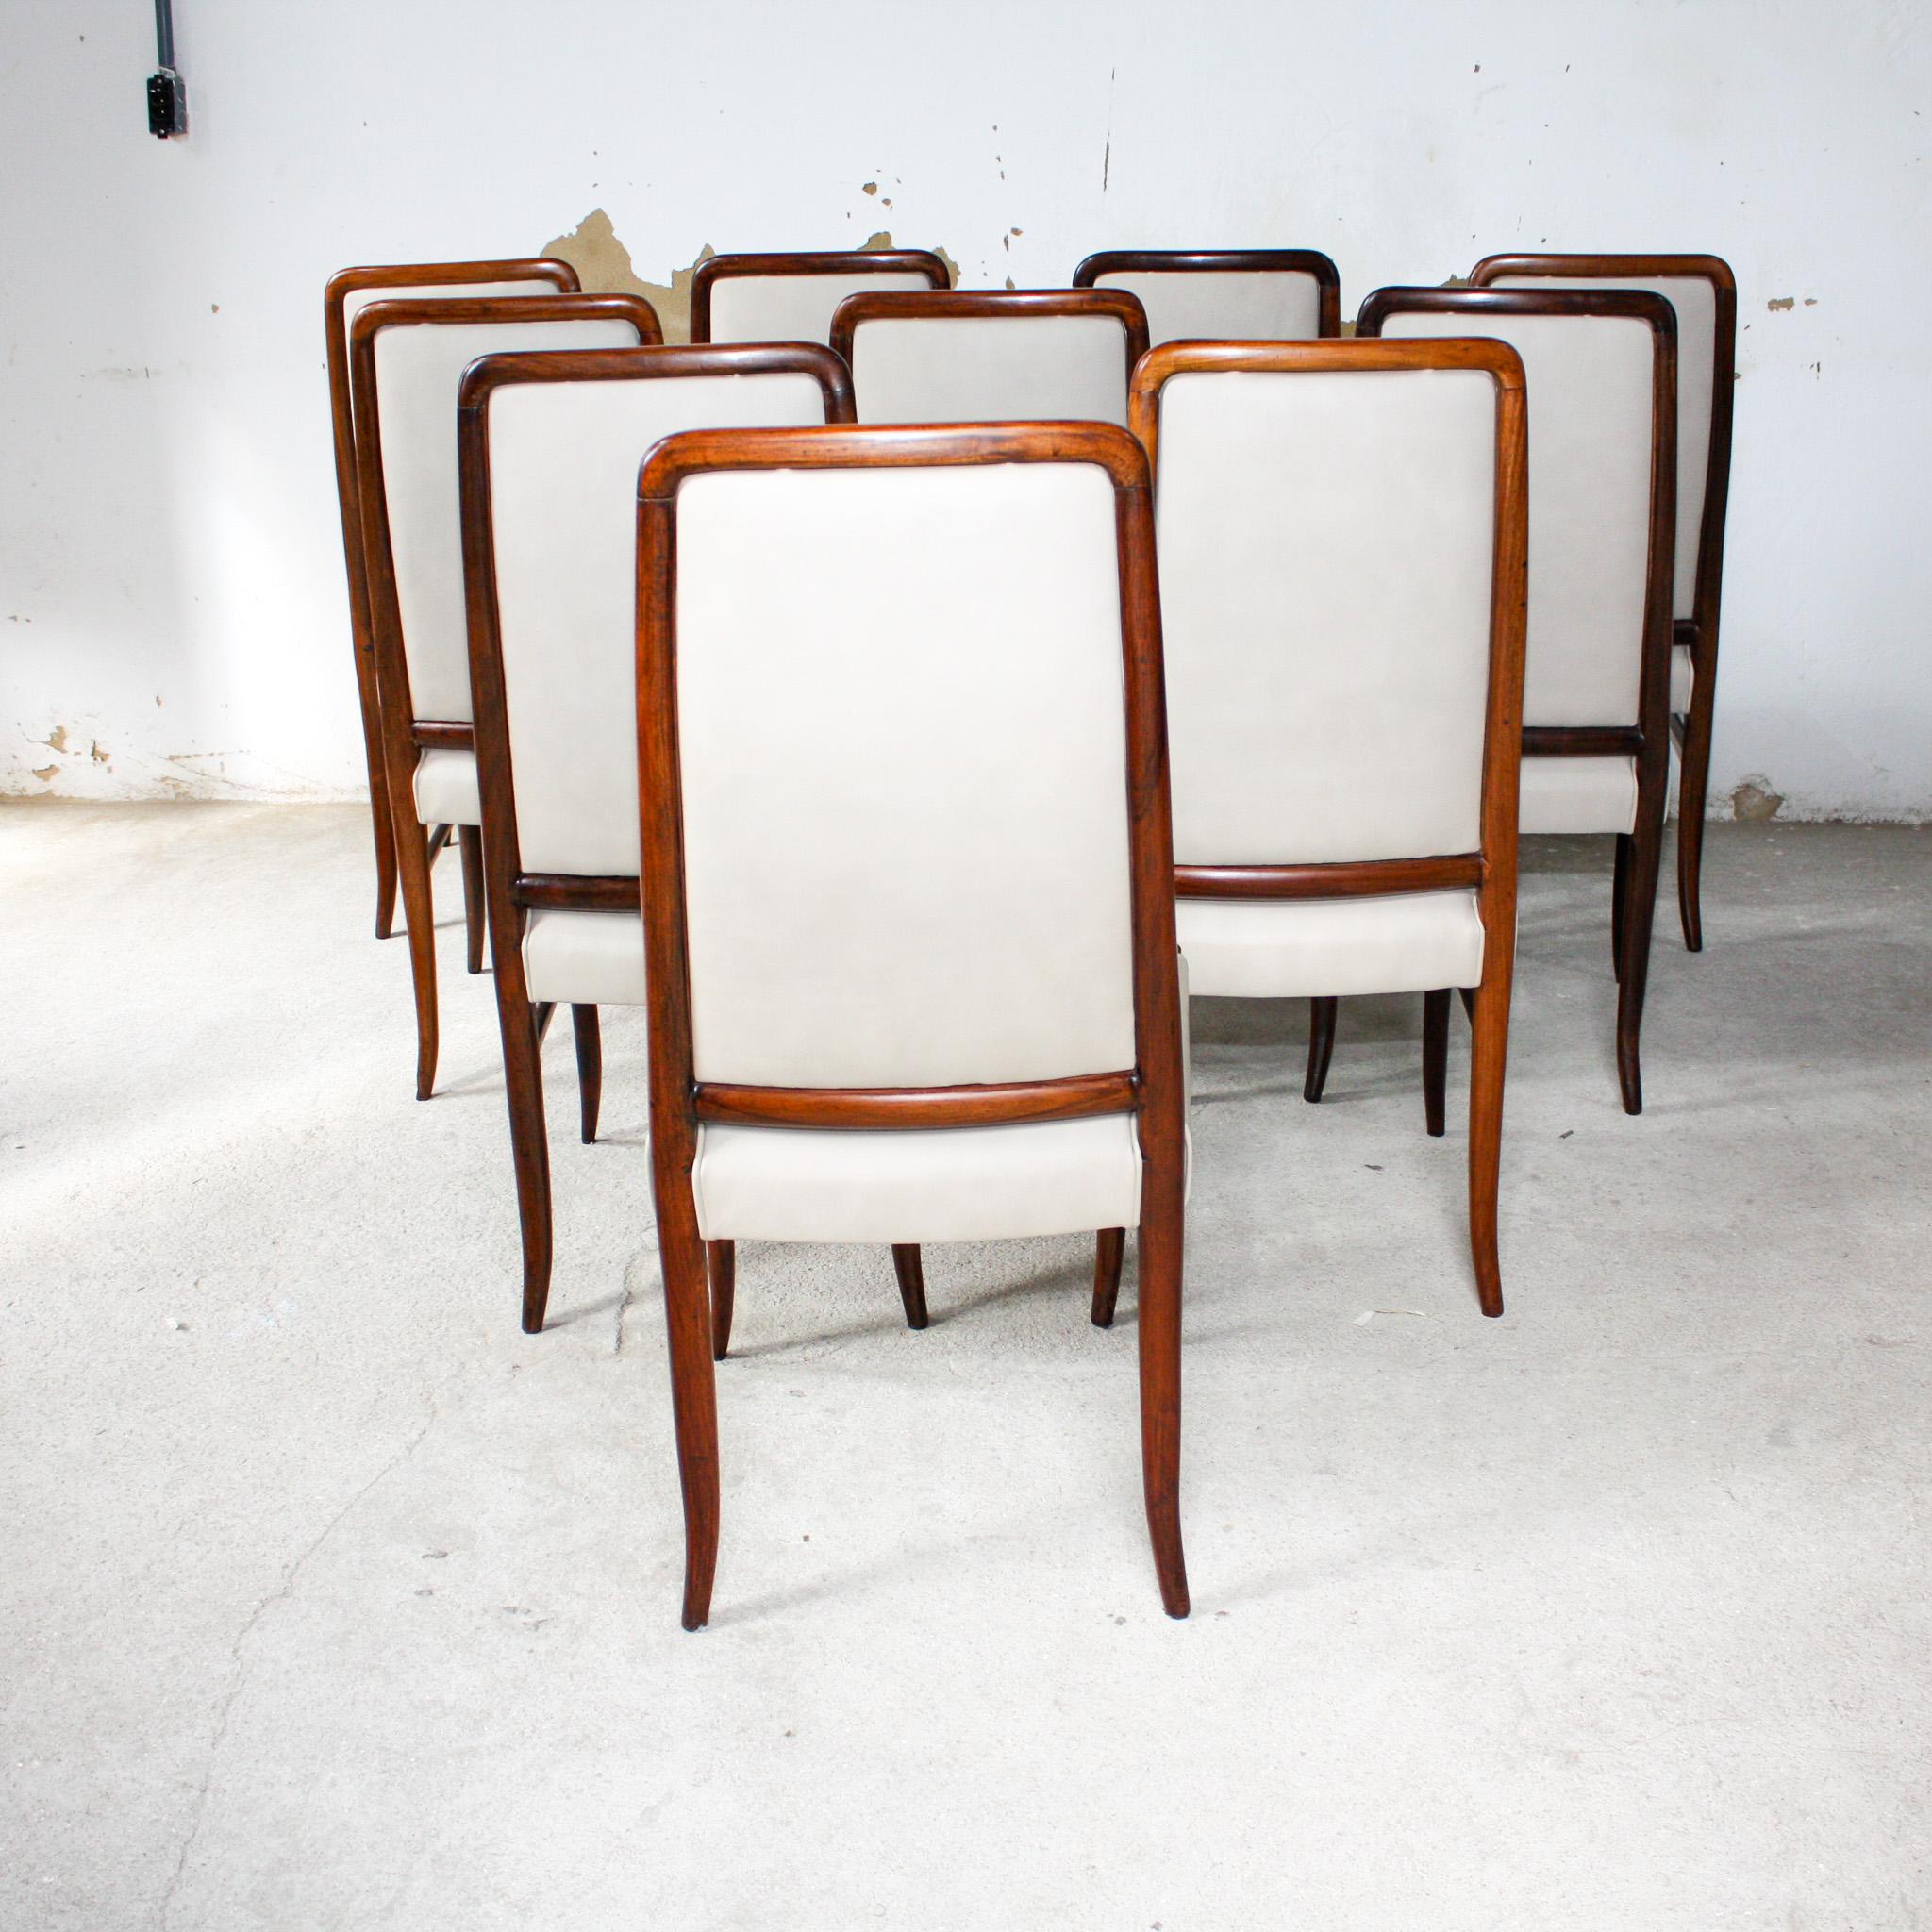 20th Century Brazilian Modern 10 Chair Set in Hardwood & Beige Leather Joaquim Tenreiro 1960s For Sale